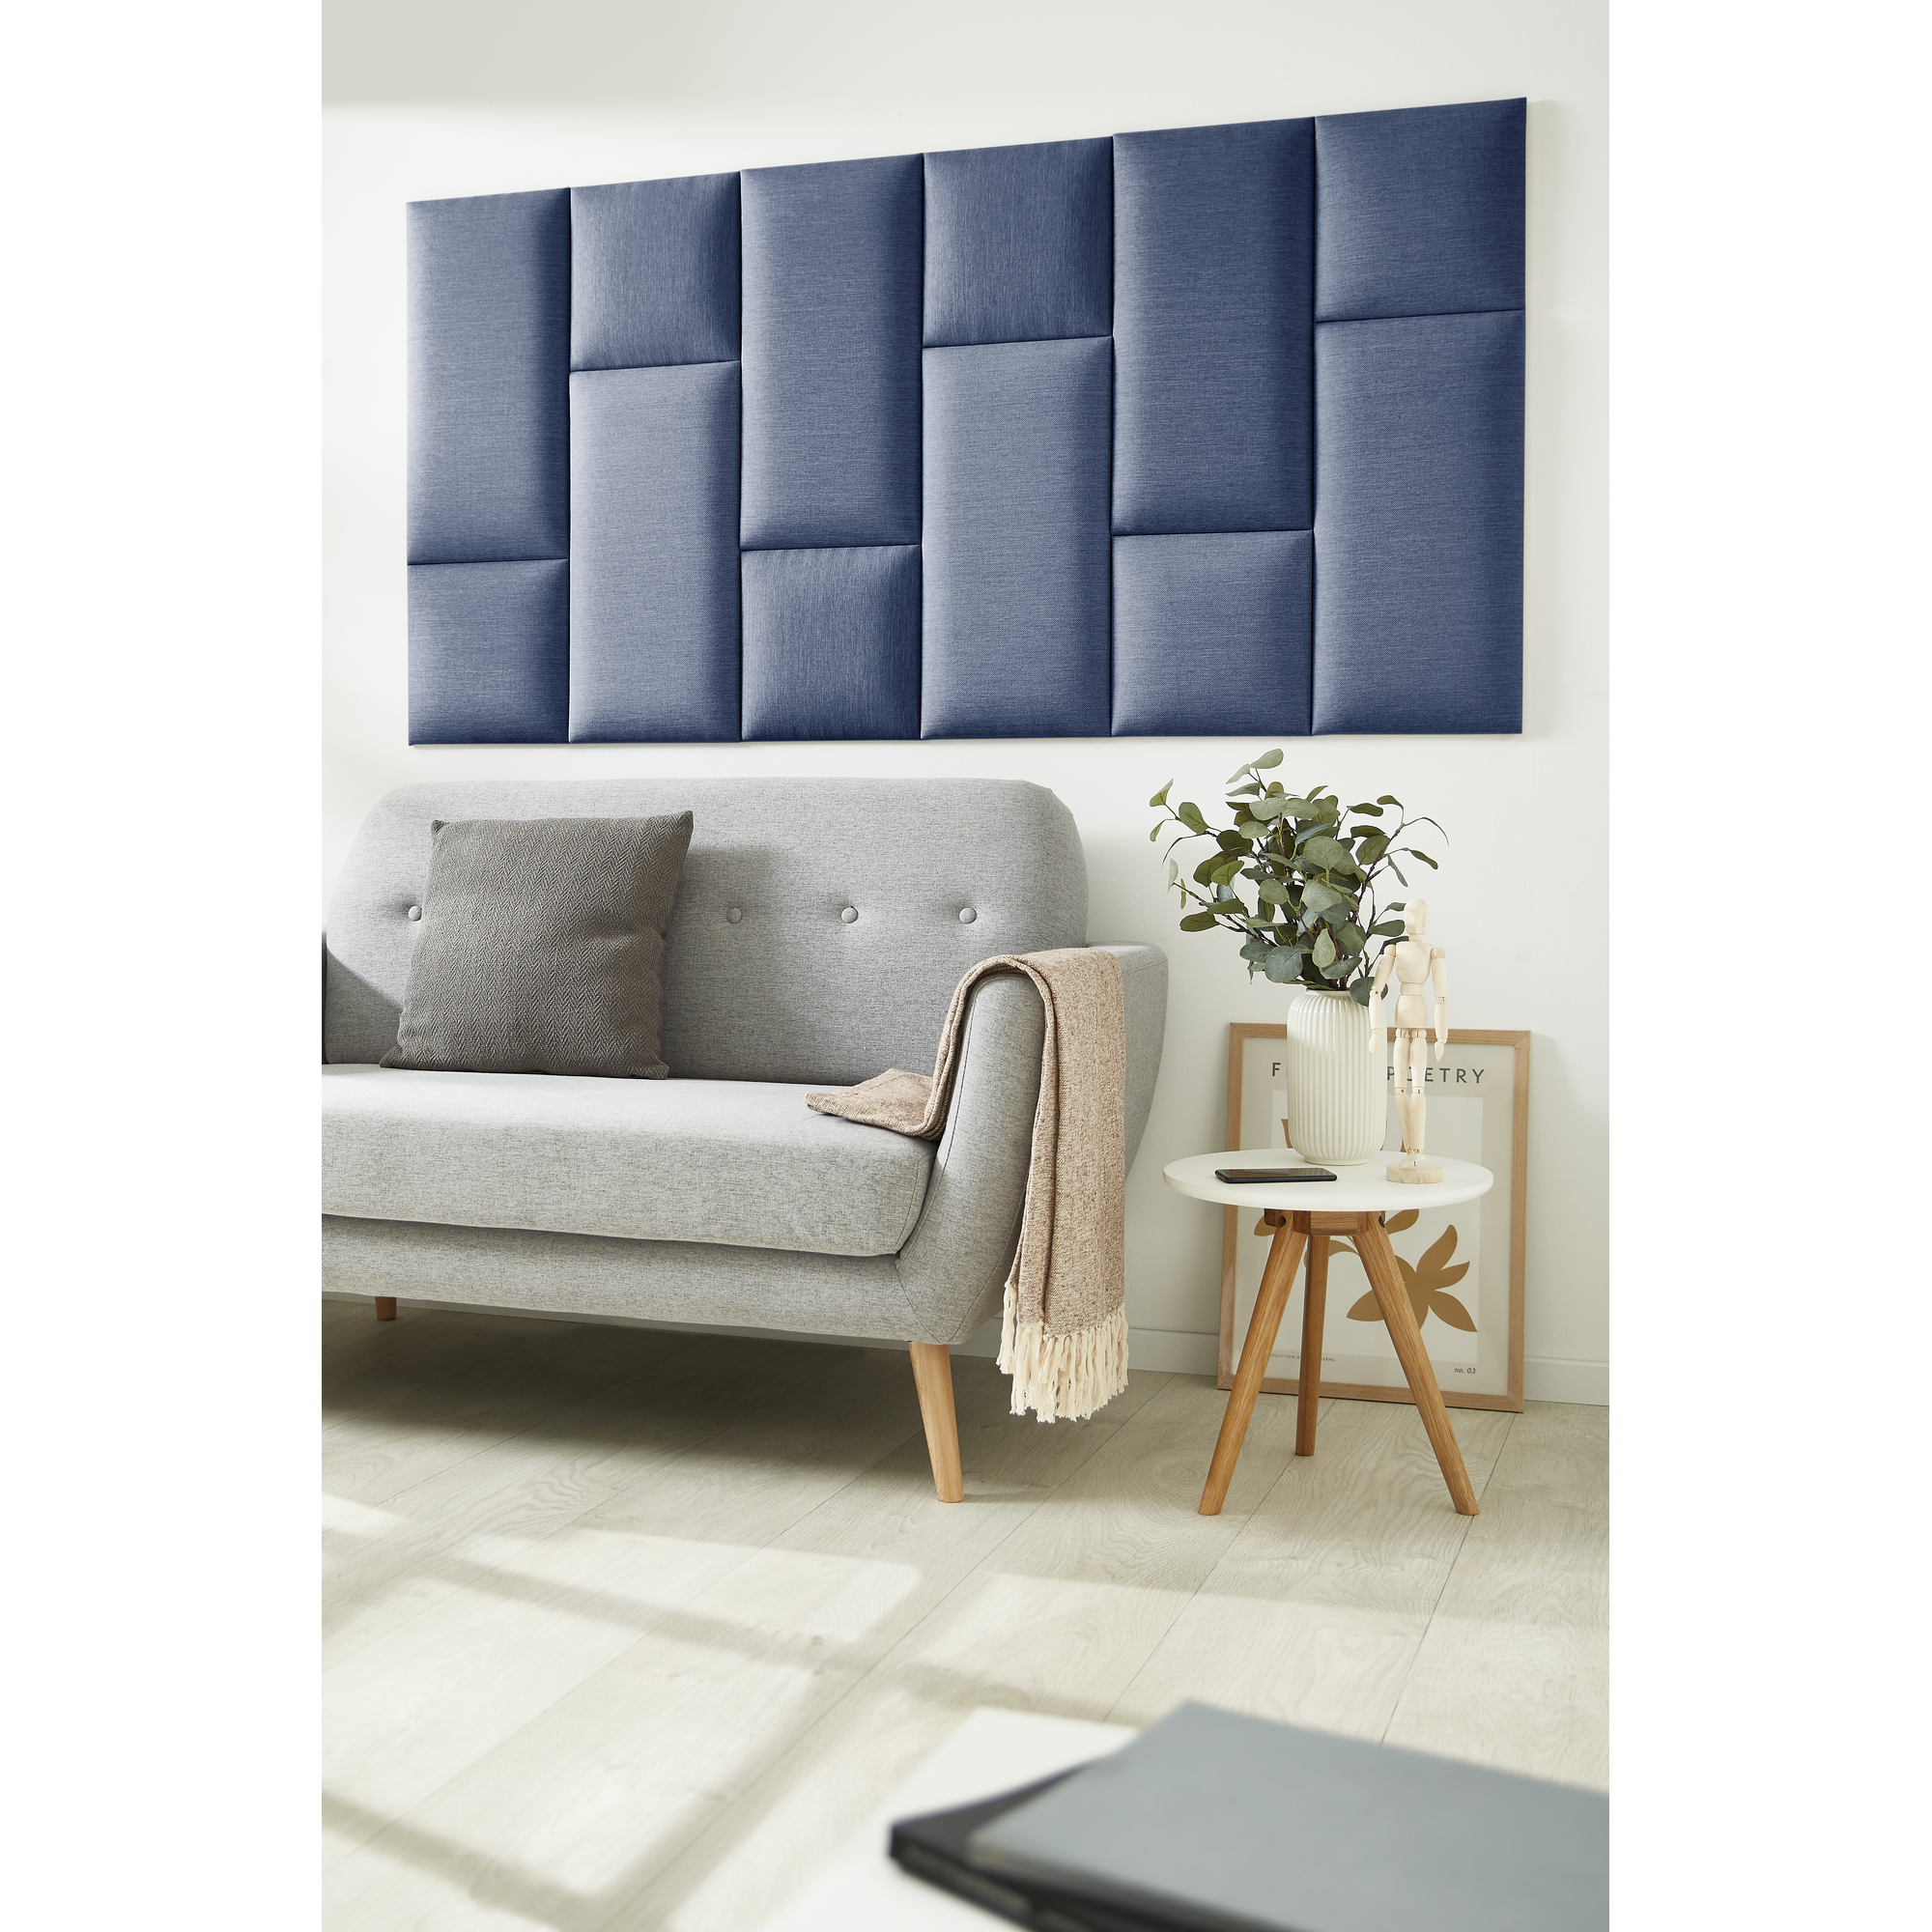 Wandkissen 'Inari' blau 30 x 30 cm + product picture